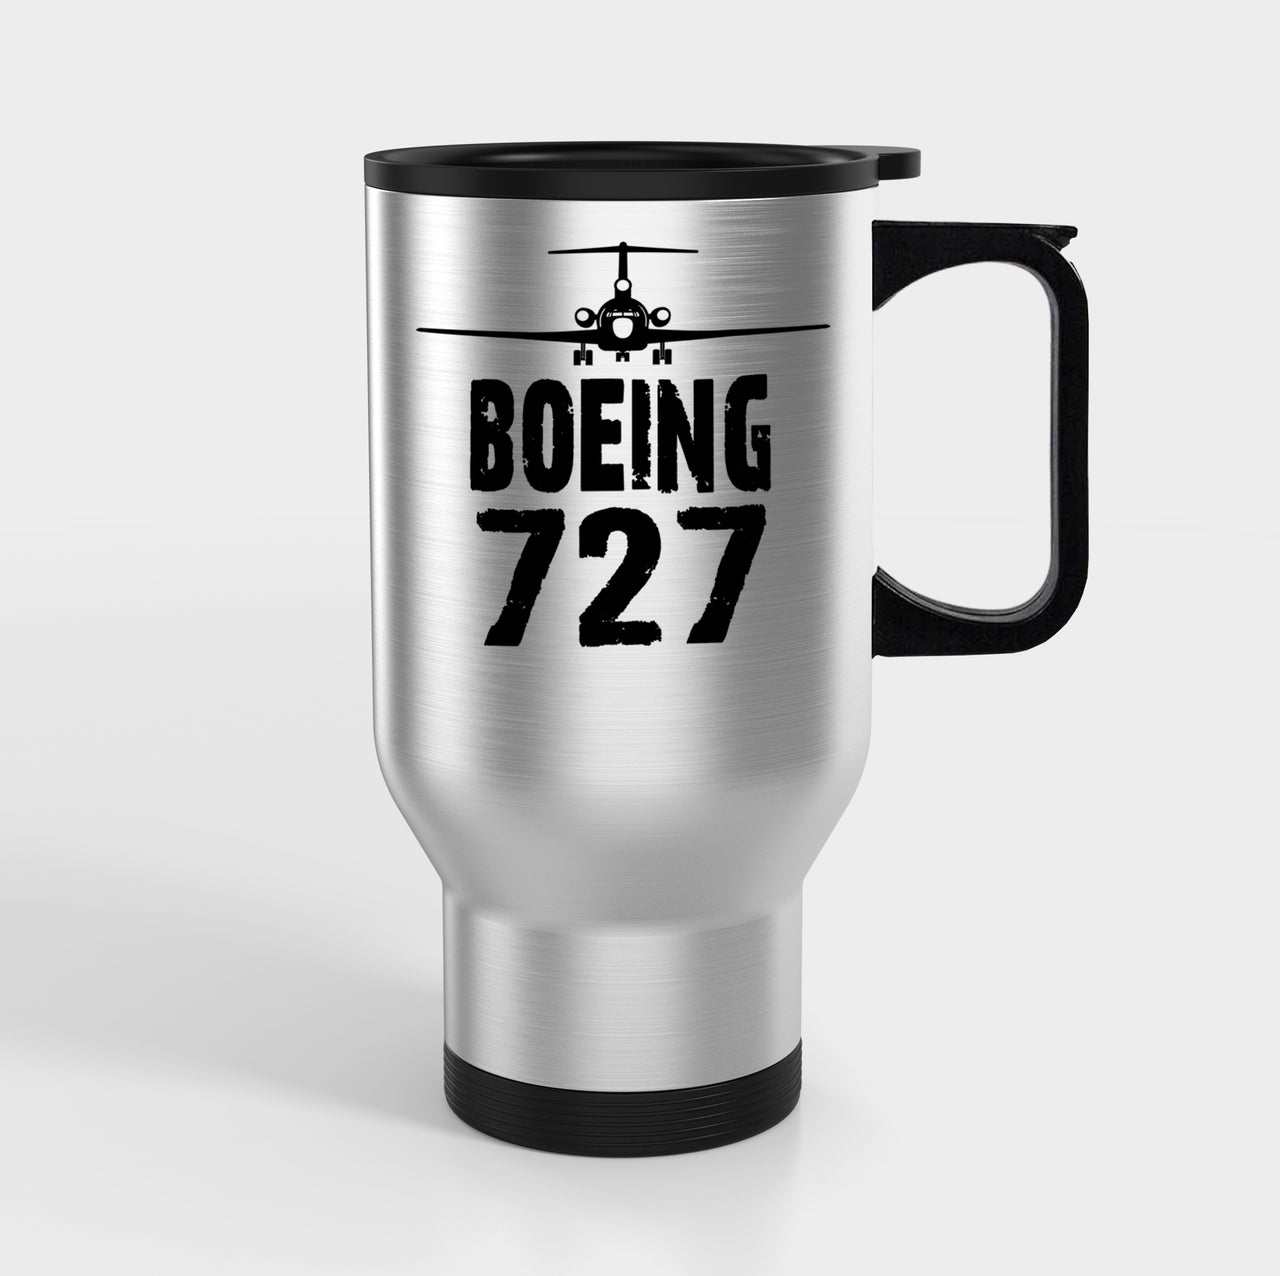 Boeing 727 & Plane Designed Travel Mugs (With Holder)